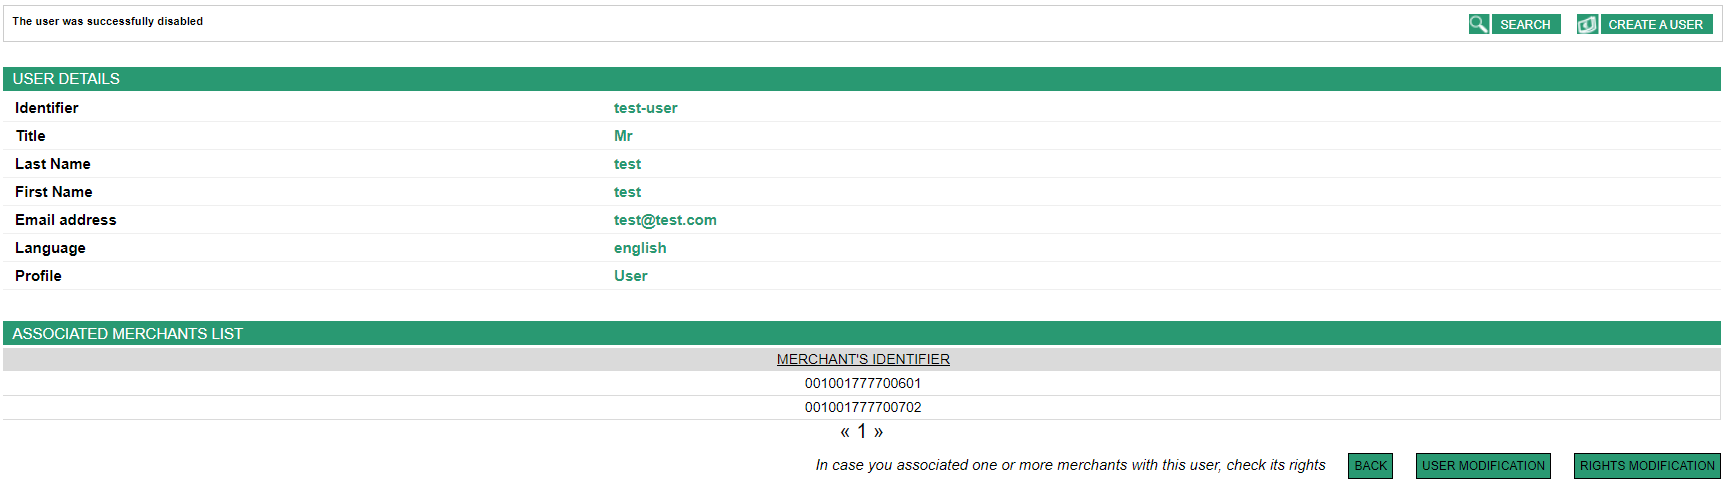 user details: identifier, name, email address